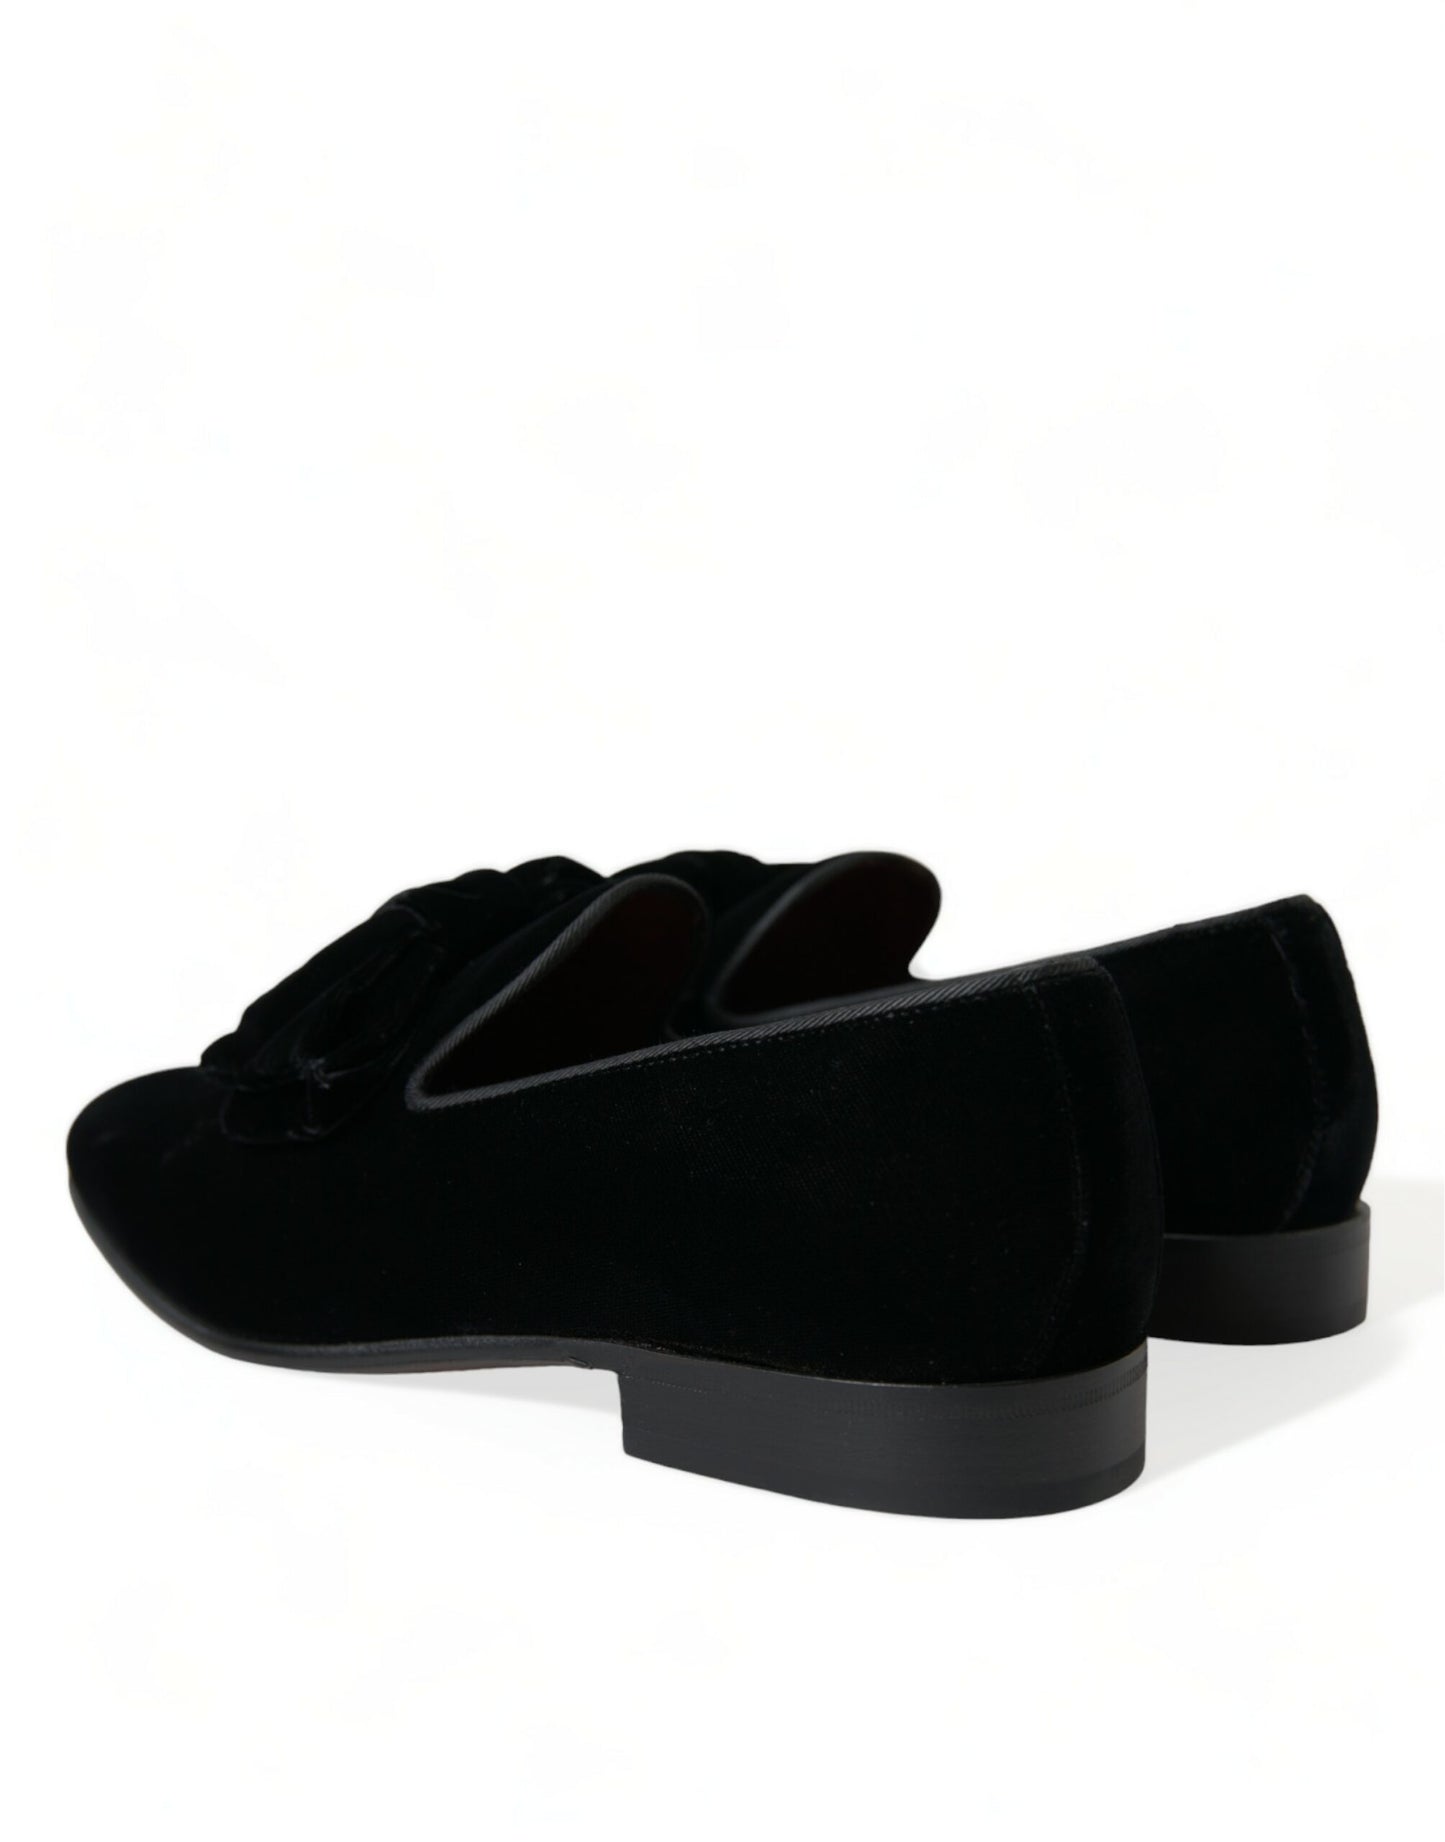 Elegant Black Velvet Loafers - Men's Luxury Footwear